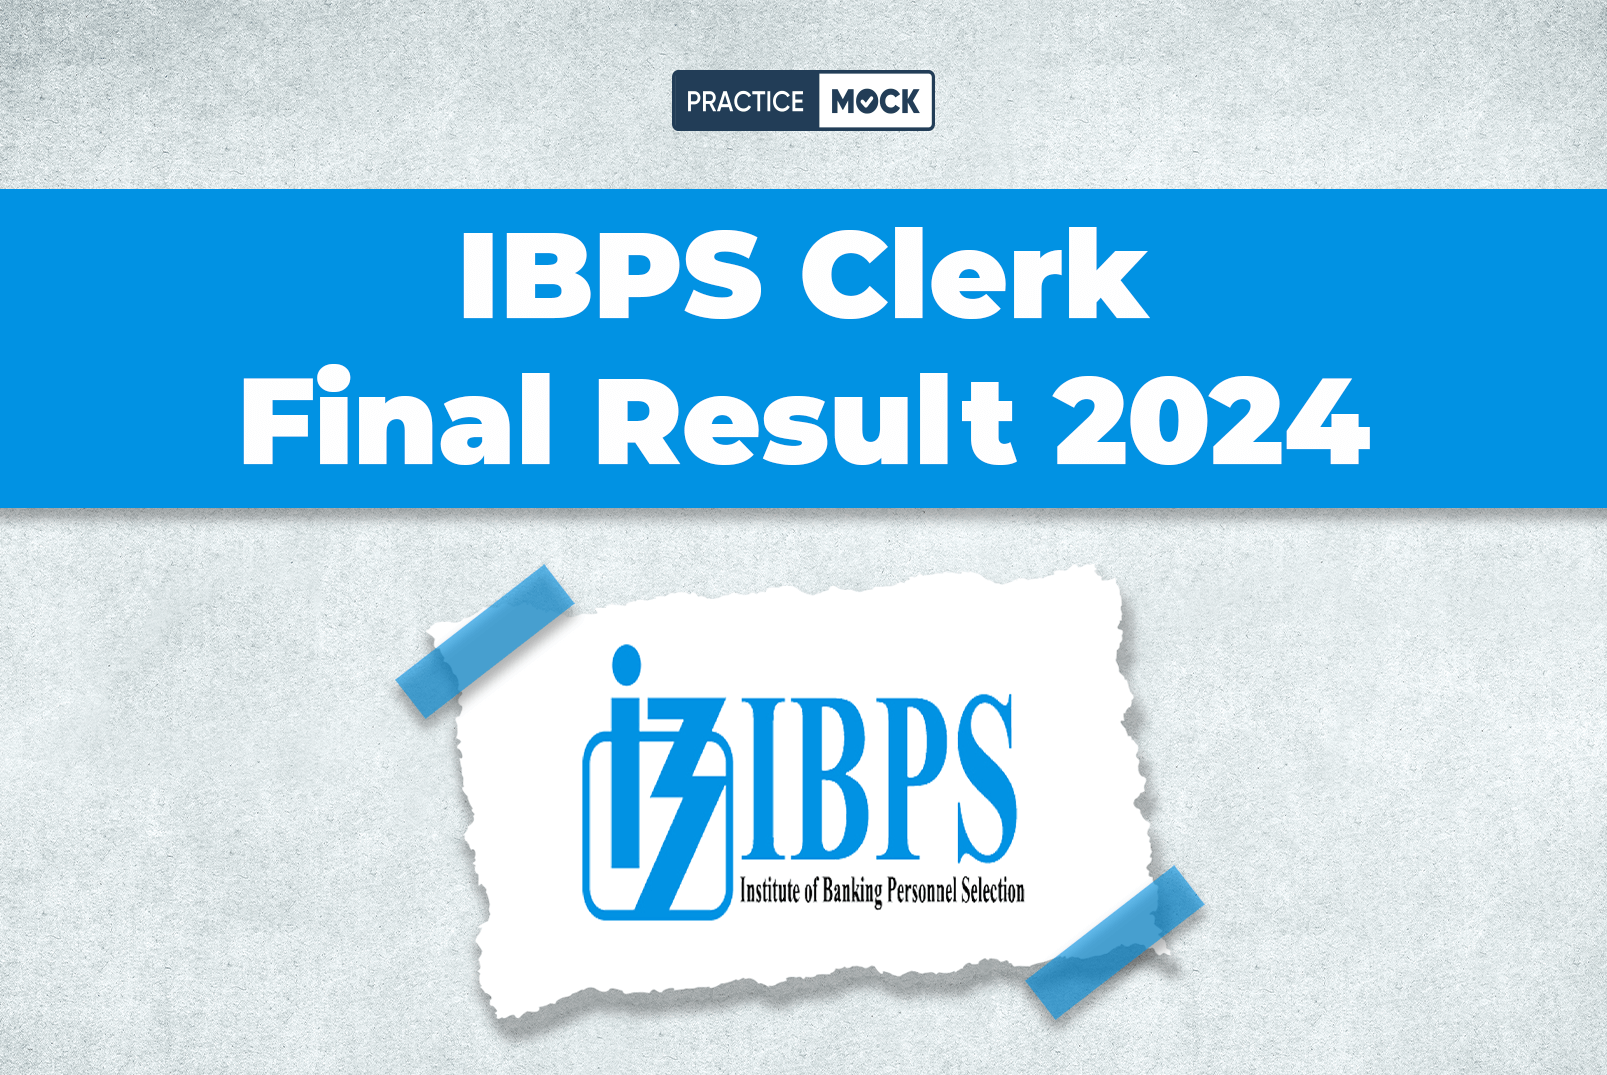 IBPS Clerk Final Result 2024